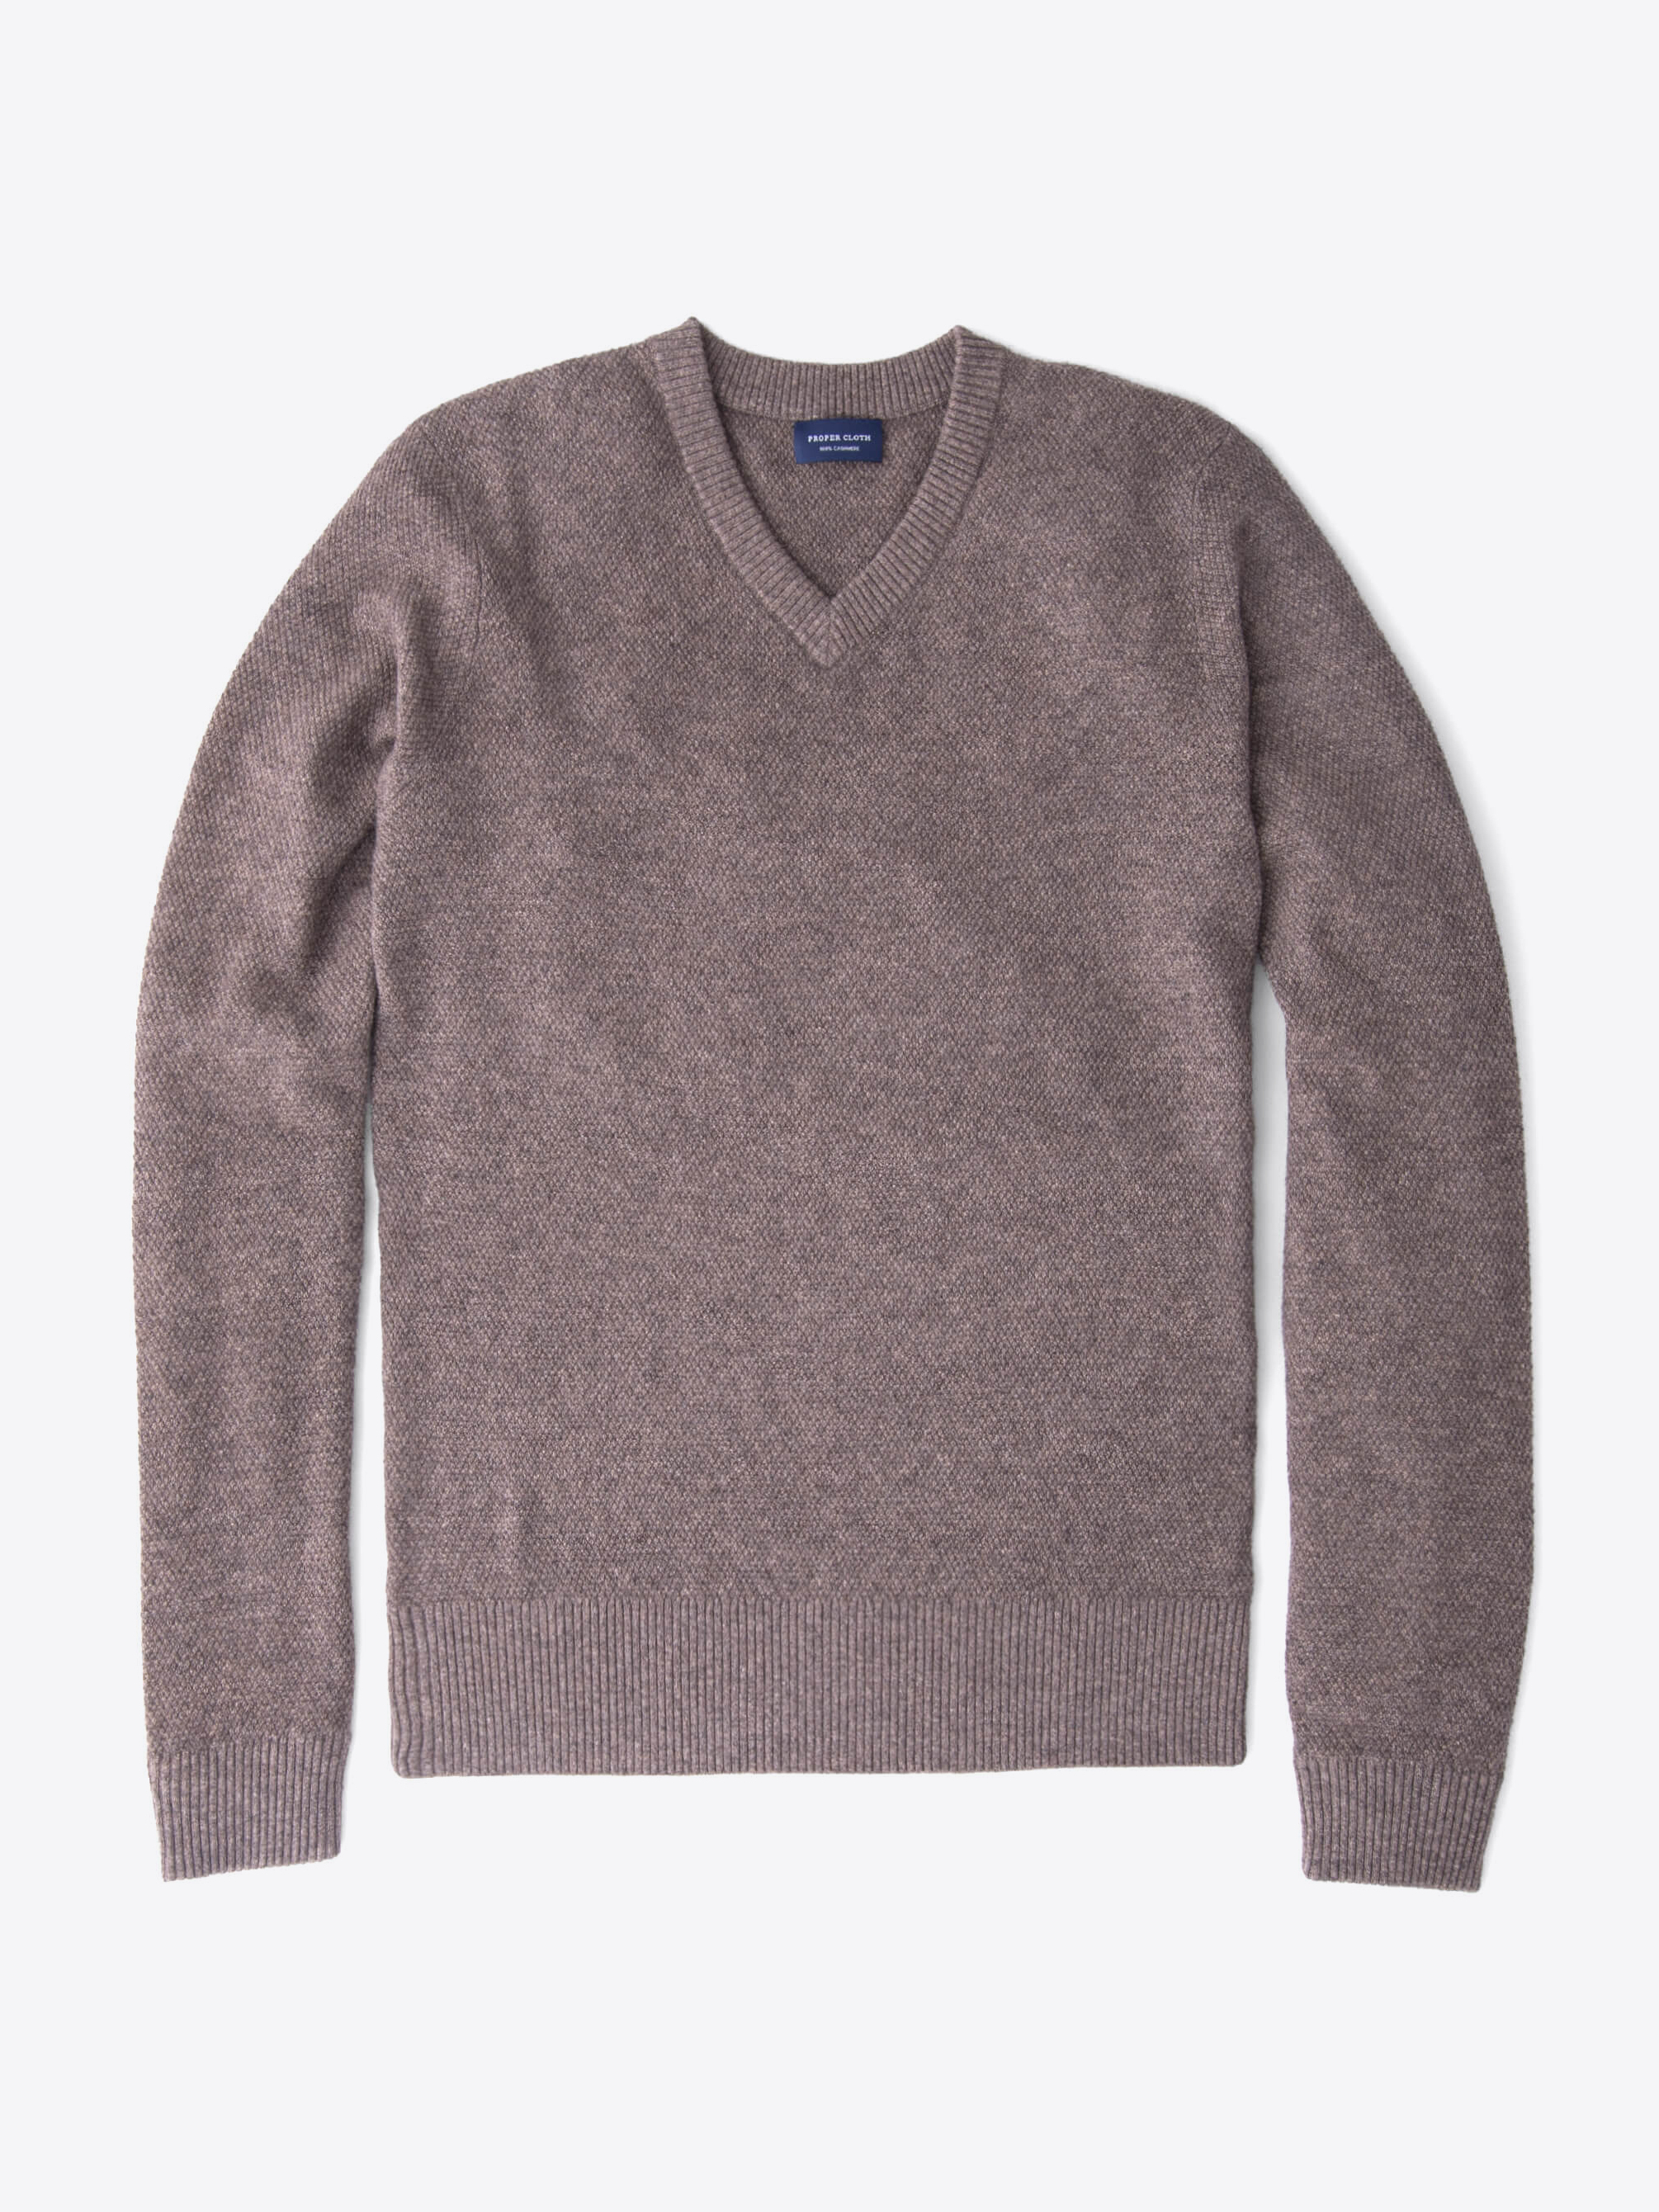 Zoom Image of Mocha Cobble Stitch Cashmere V-Neck Sweater